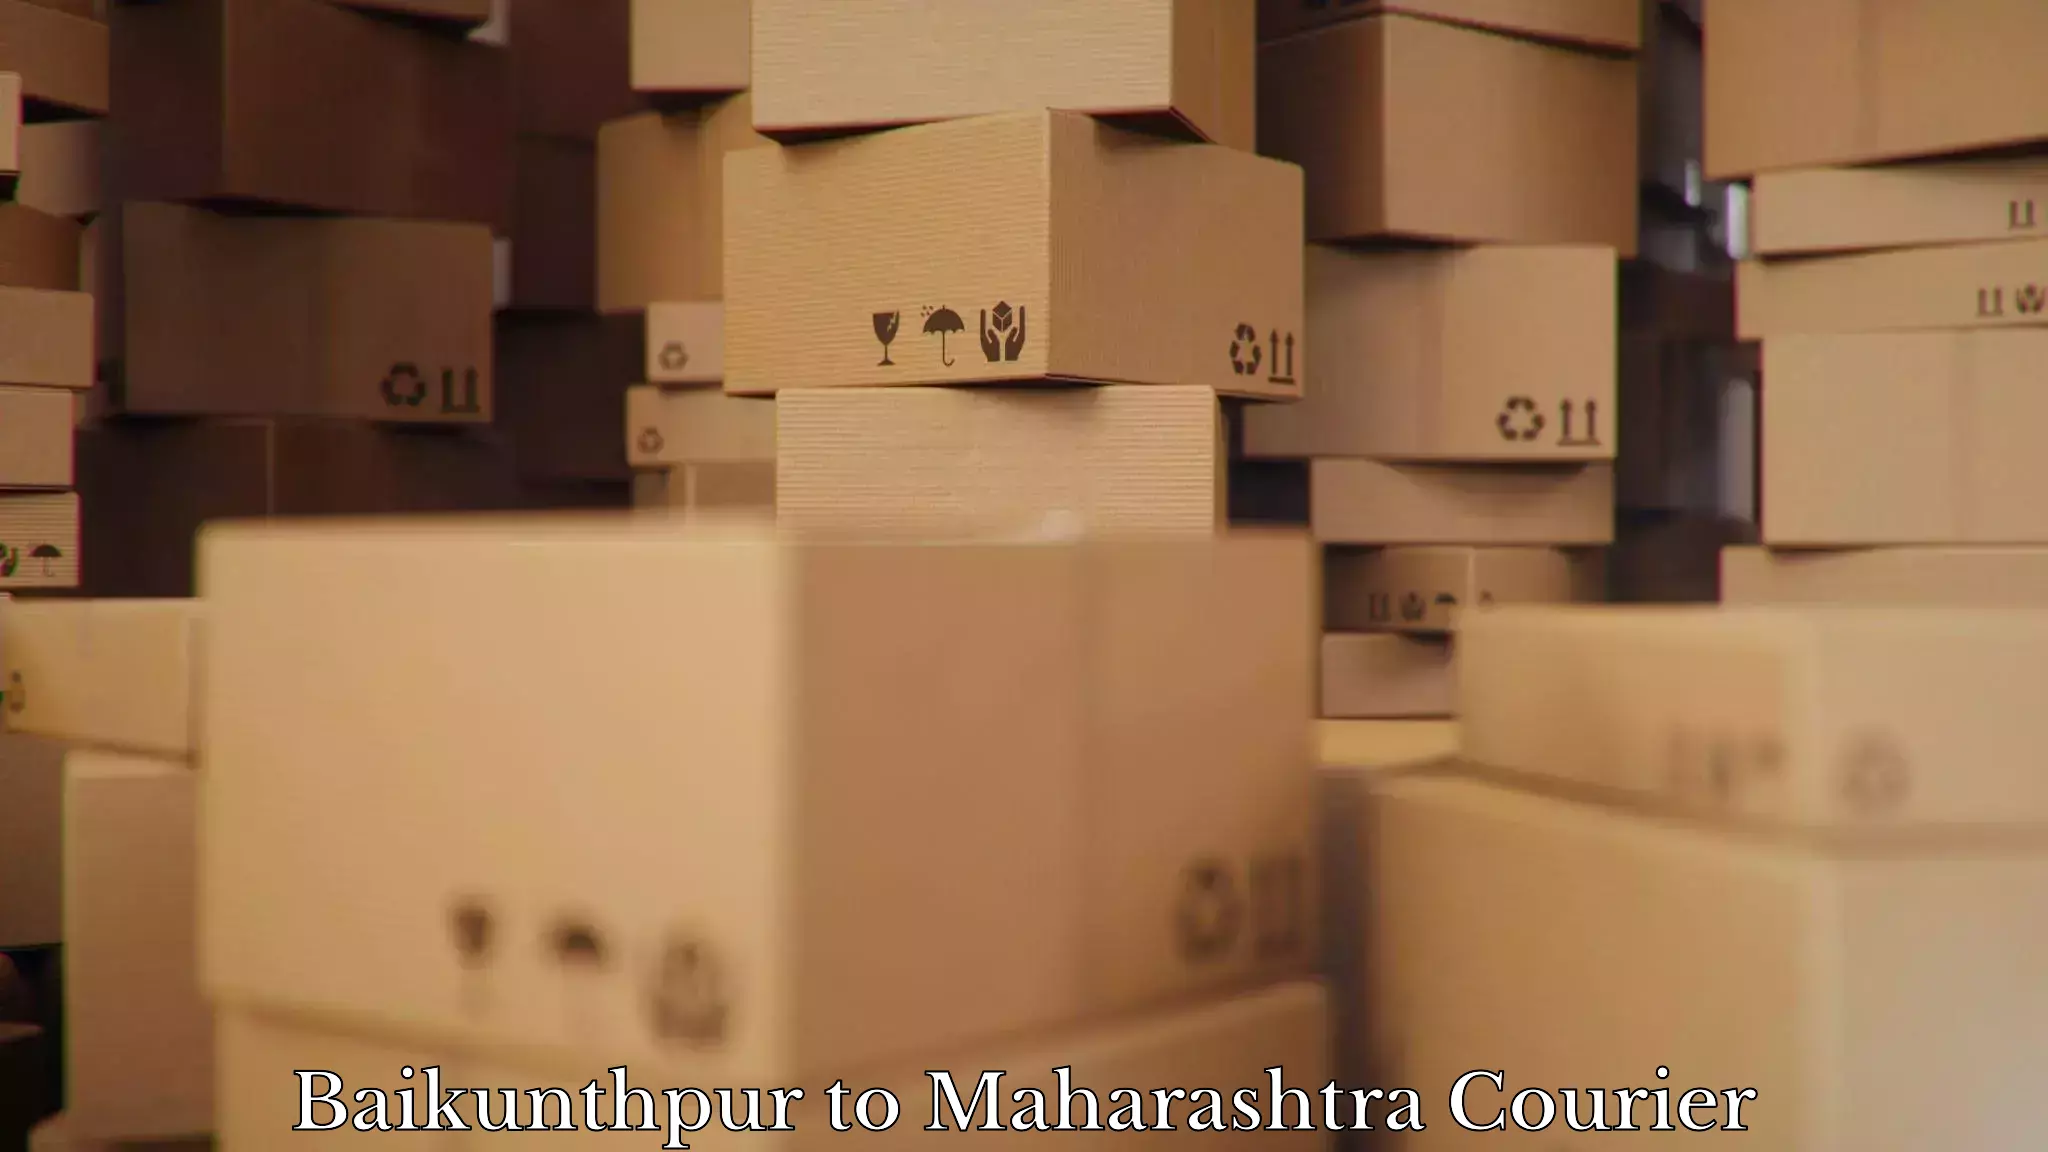 Efficient moving company in Baikunthpur to Dusarbid